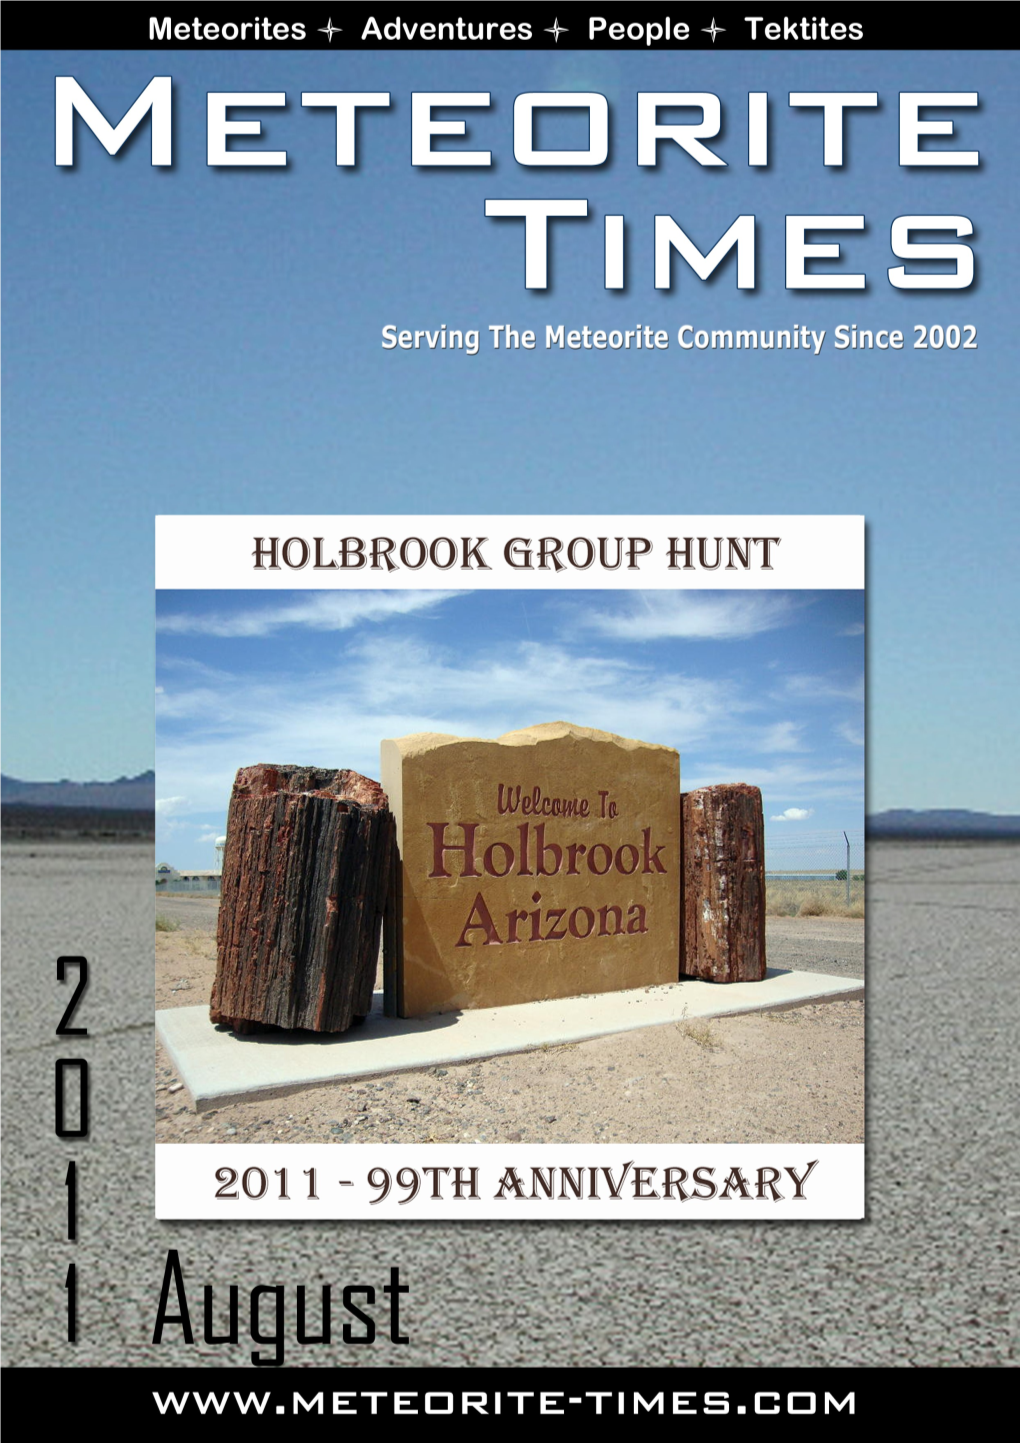 Meteorite-Times 2011 8.Pdf